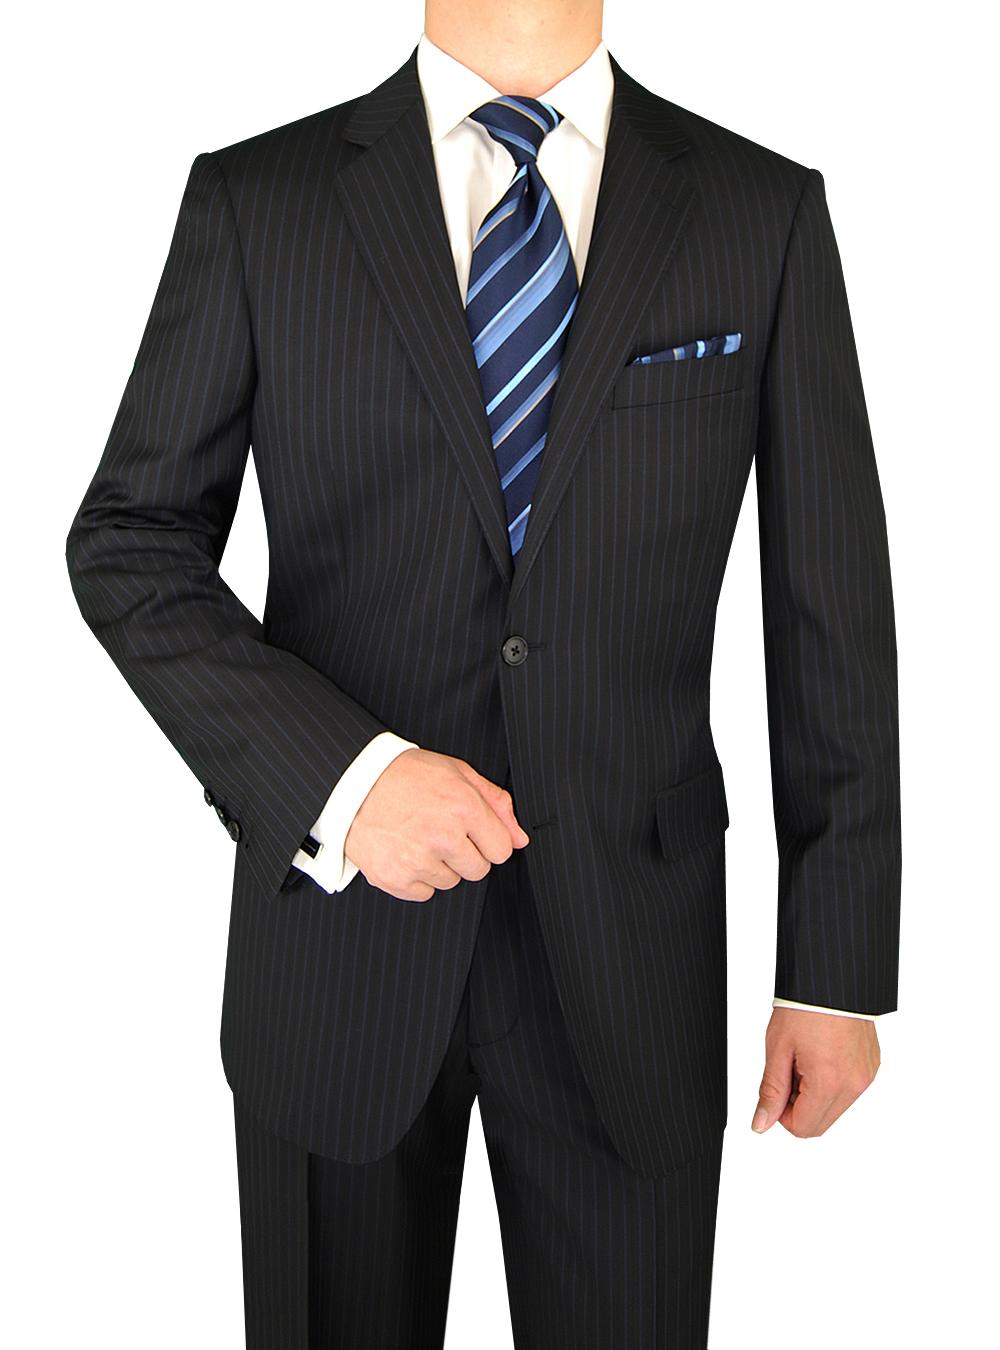 LN LUCIANO NATAZZI Italian Men's Suit 160'S Canali Cashmere Wool 2 Button Stripe Navy Stripe - image 1 of 5